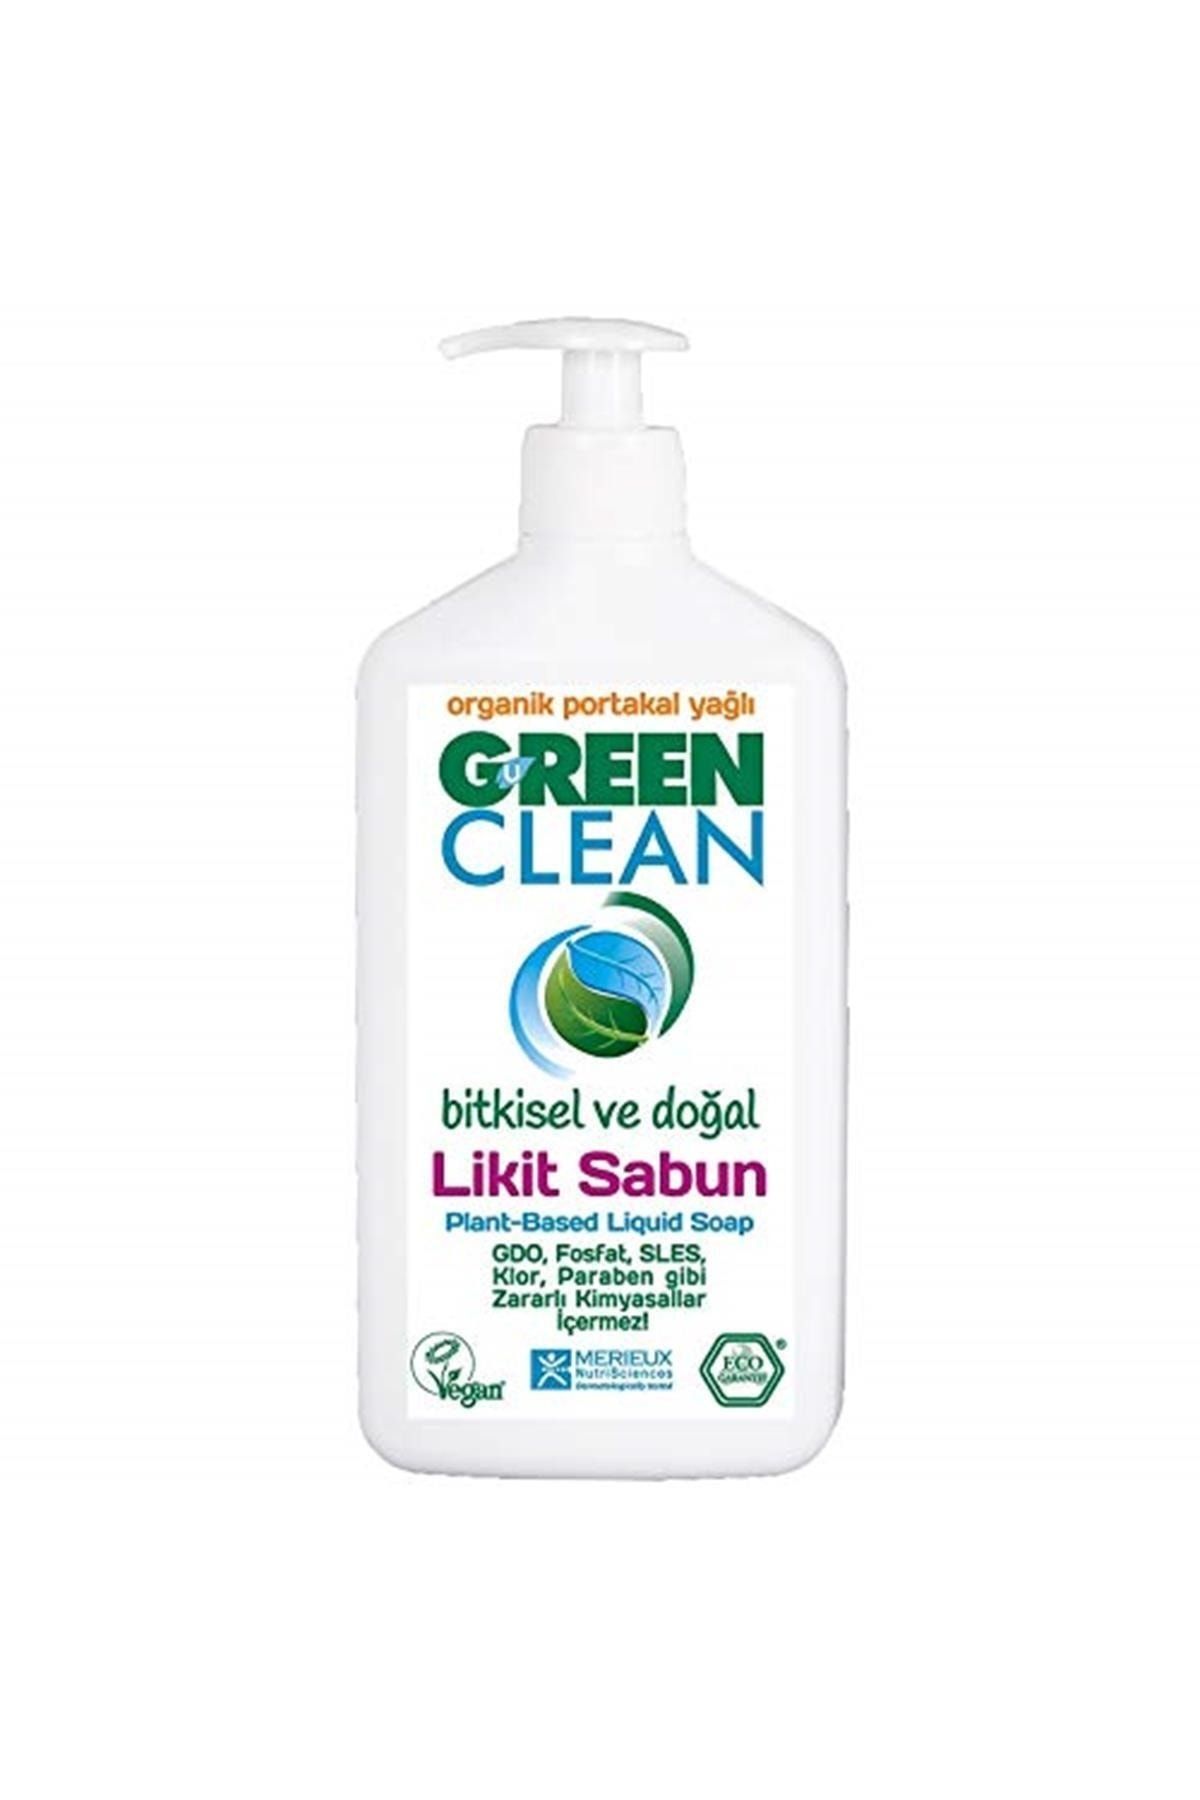 Berr Doğal Green Clean Likit Sabun 500 Ml - Organik Likit Sabun - Vegan Sabun